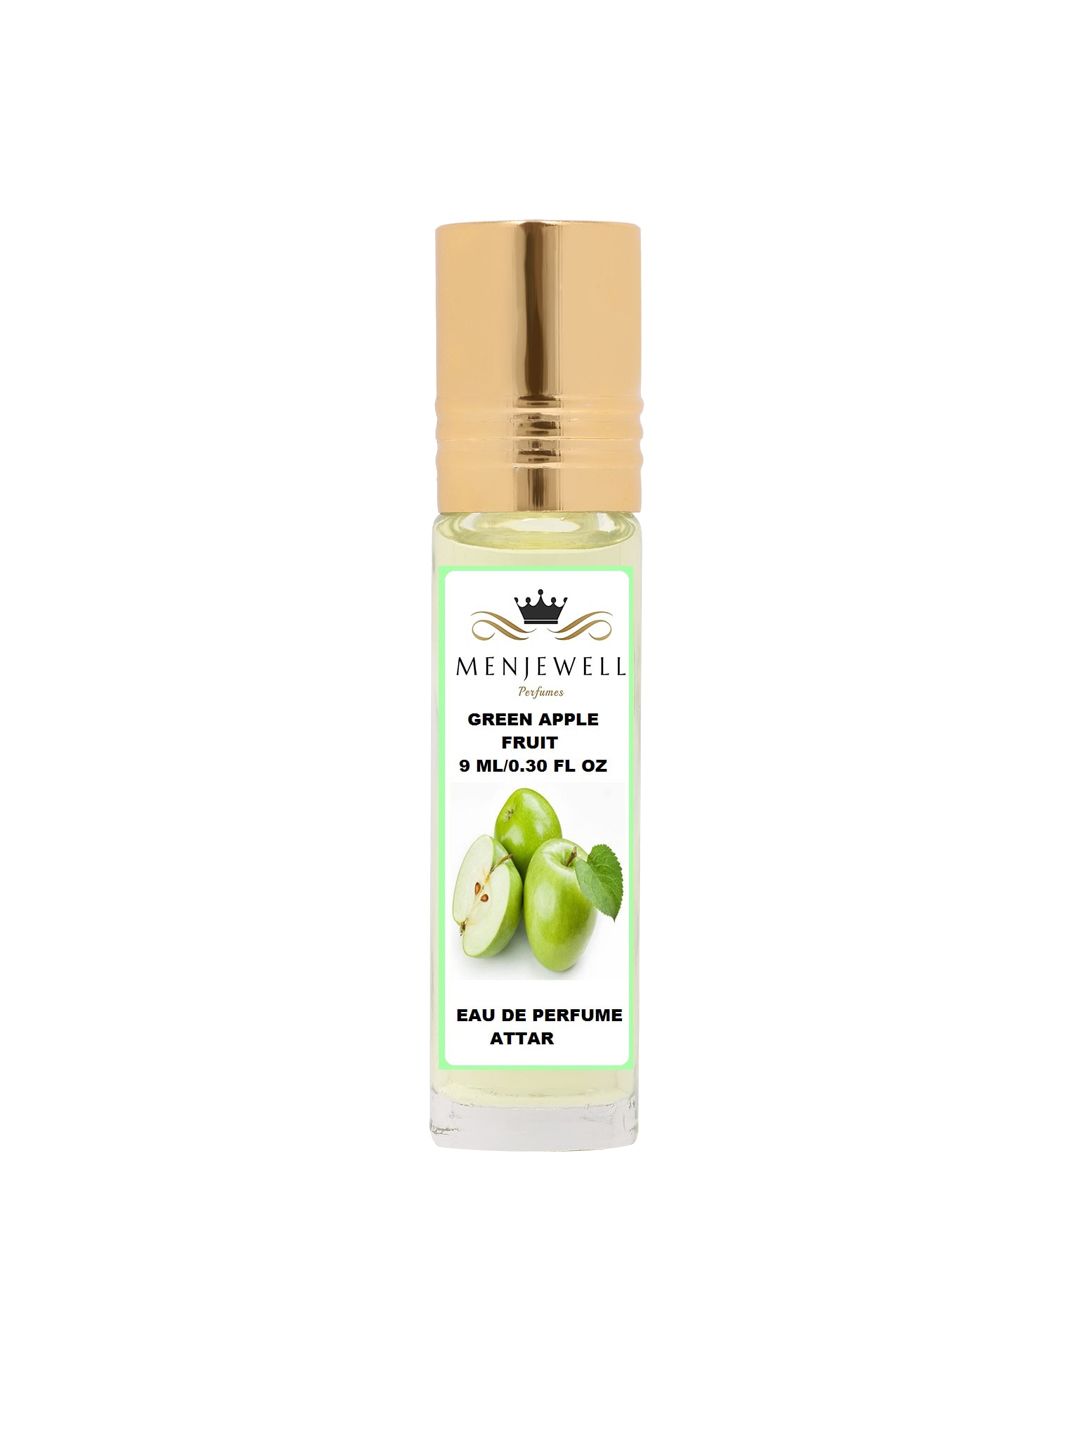 Menjewell Green Apple Natural Eau de Parfum Attar 9ml Price in India